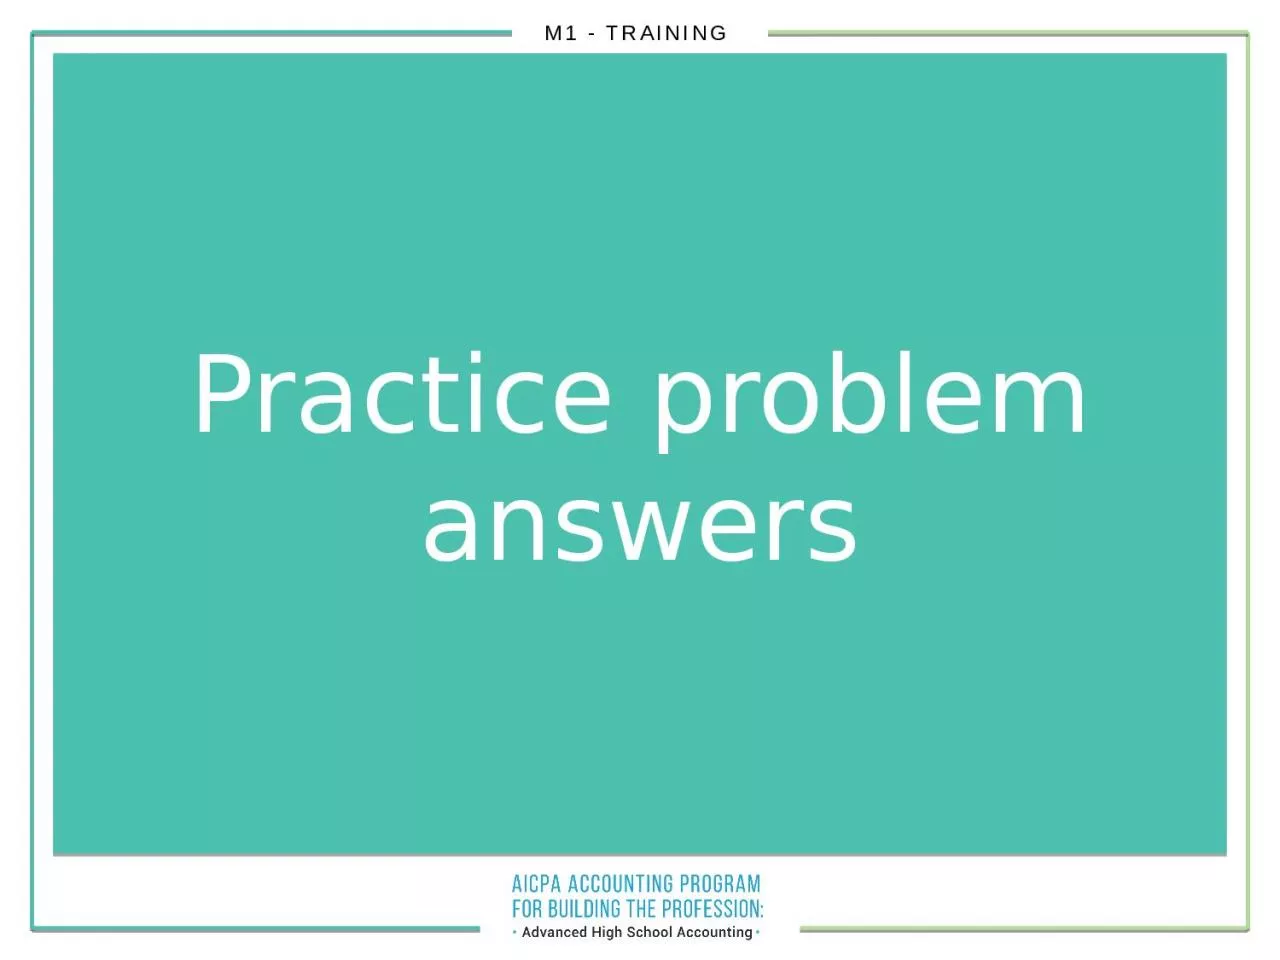 Practice problem answers